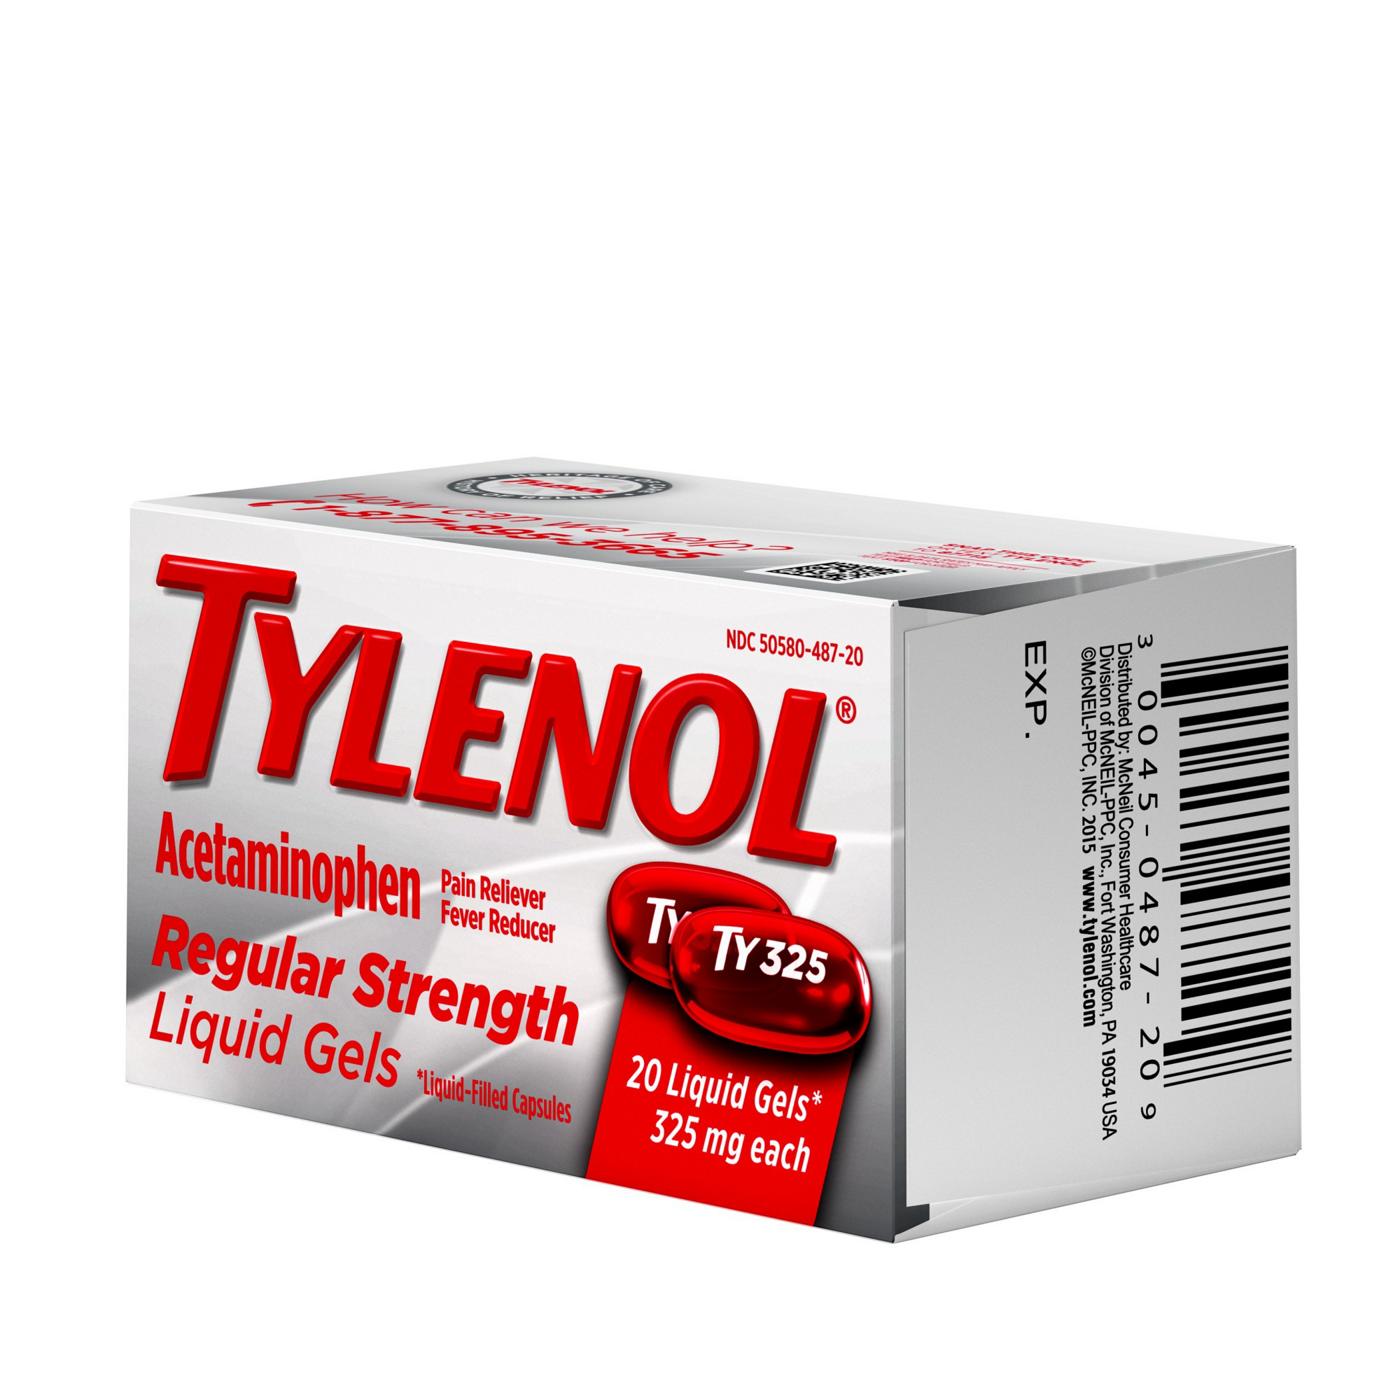 Tylenol Regular Strength Liquid Gels; image 3 of 3